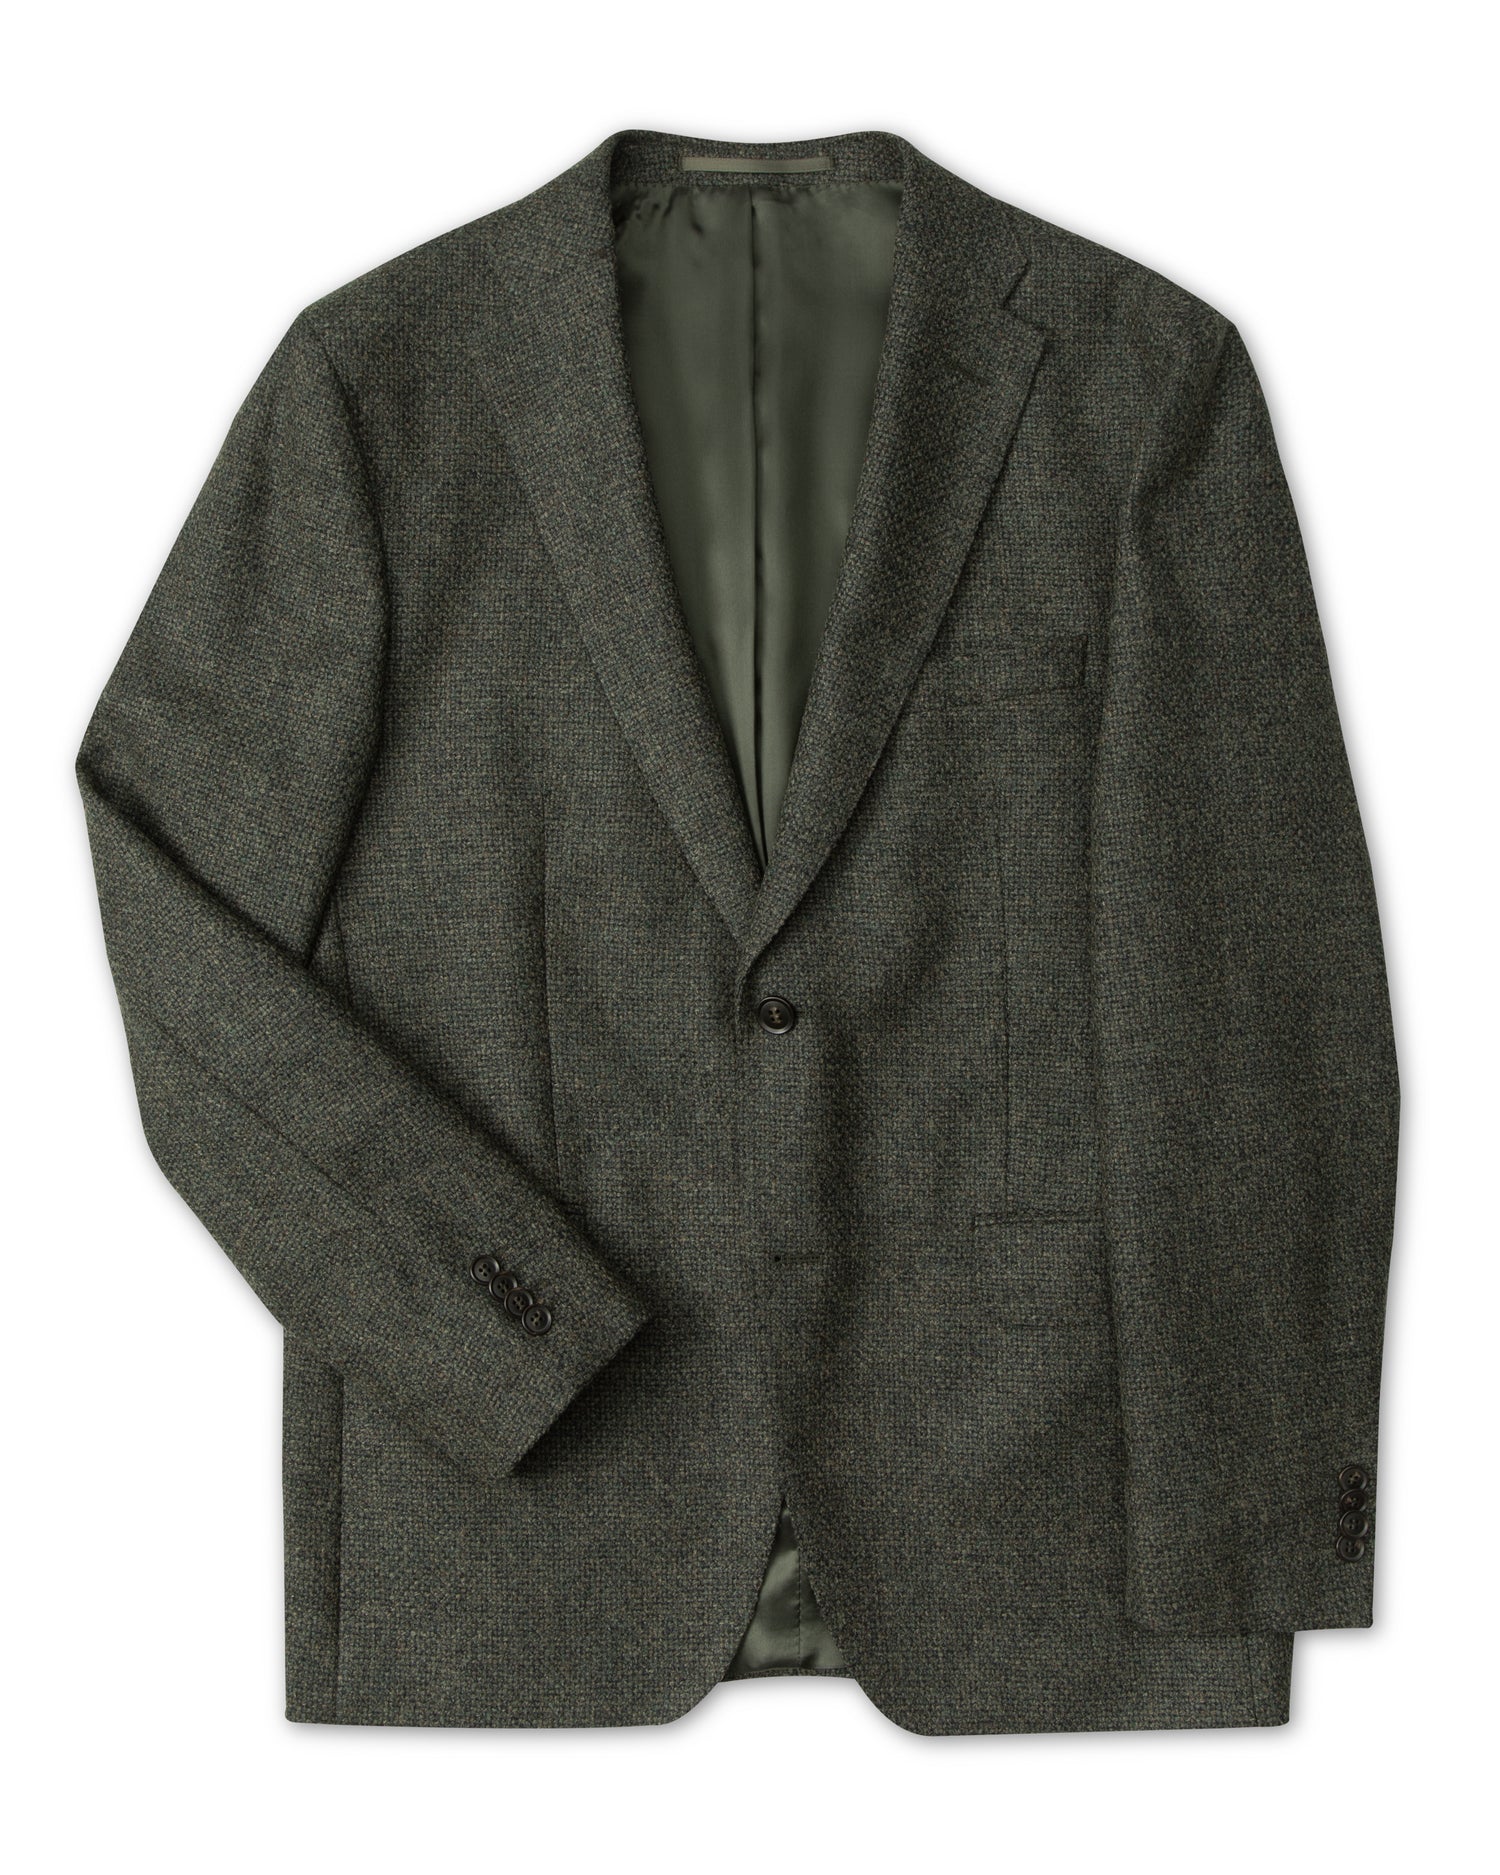 7700.9300.78 Bilbao Blazer in Bottoli wool-cashmere-cotton (8456859320650)